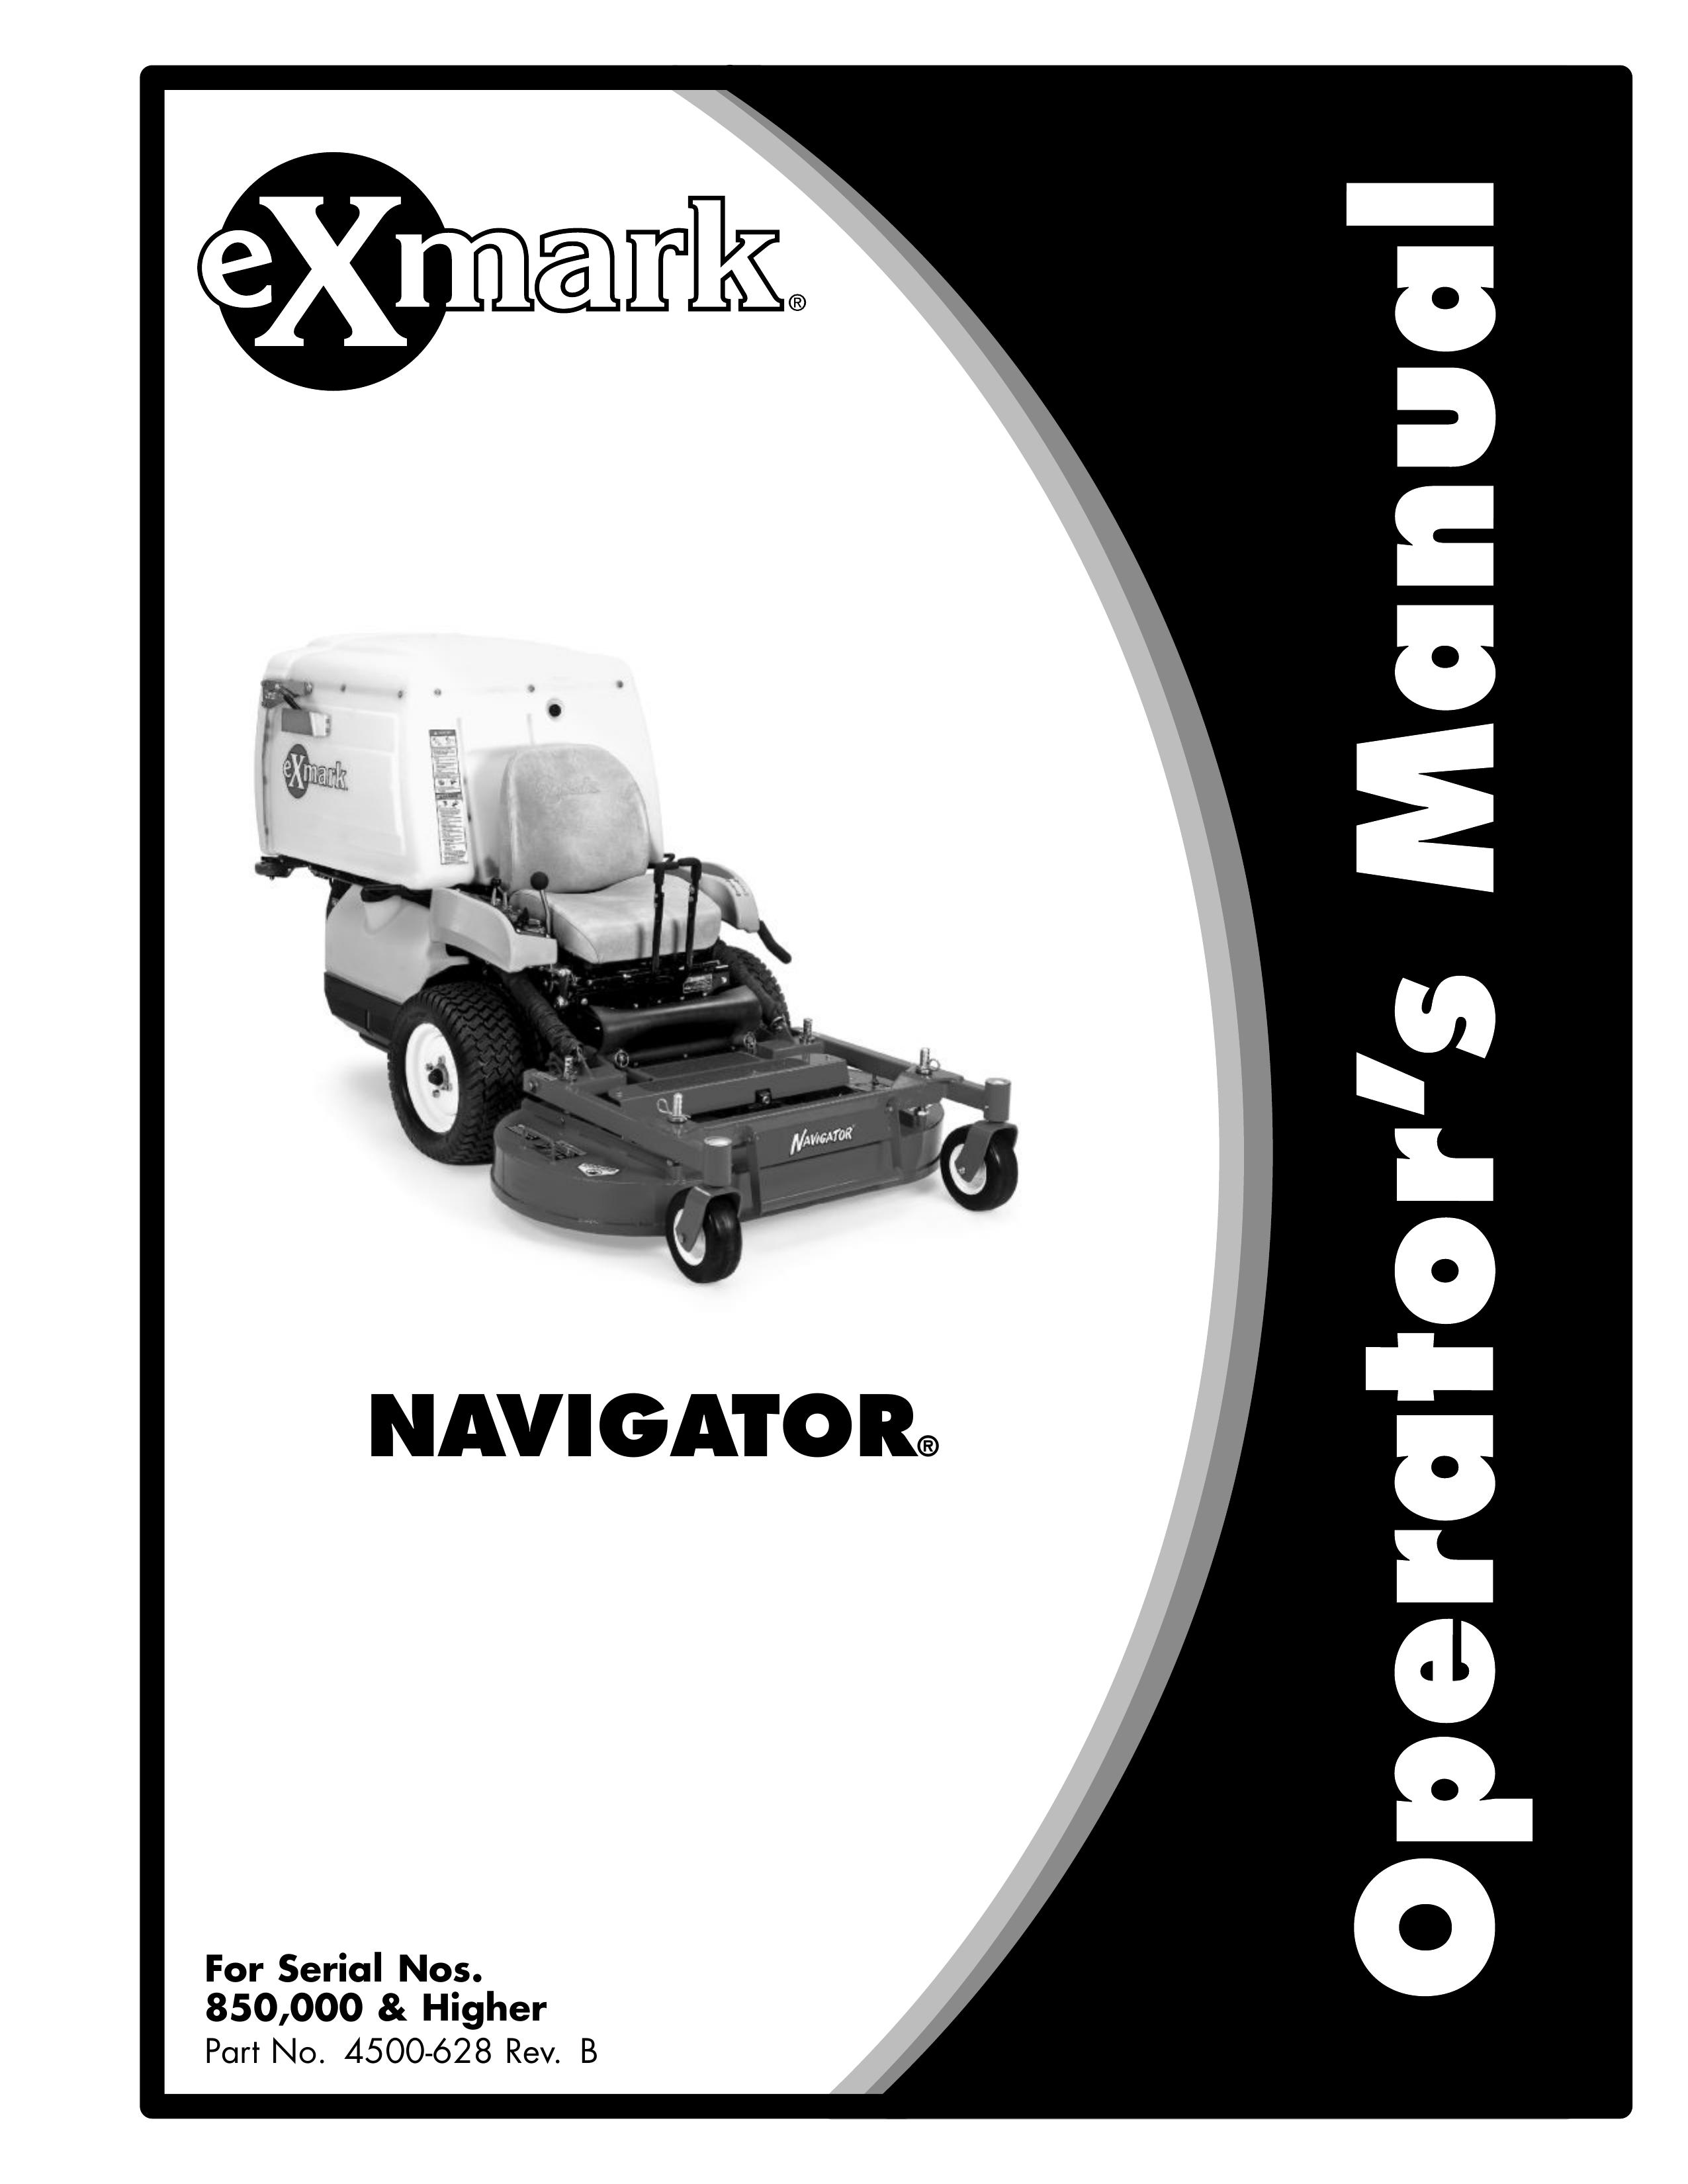 Exmark 0 Lawn Mower User Manual